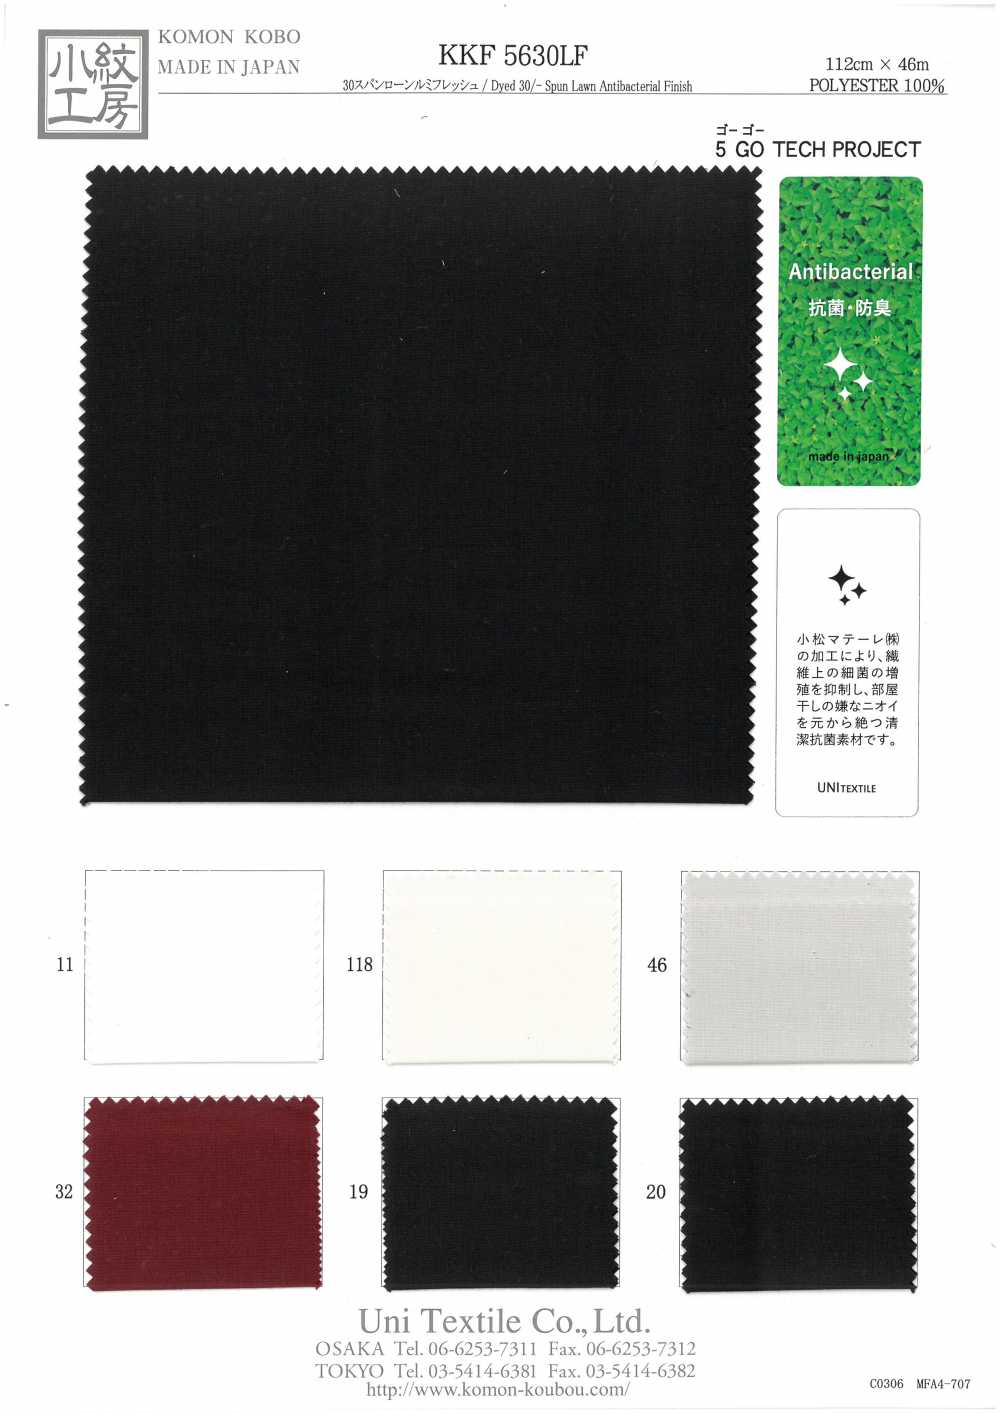 KKF5630LF 30 Lumi Frais De Pelouse Filée[Fabrication De Textile] Uni Textile